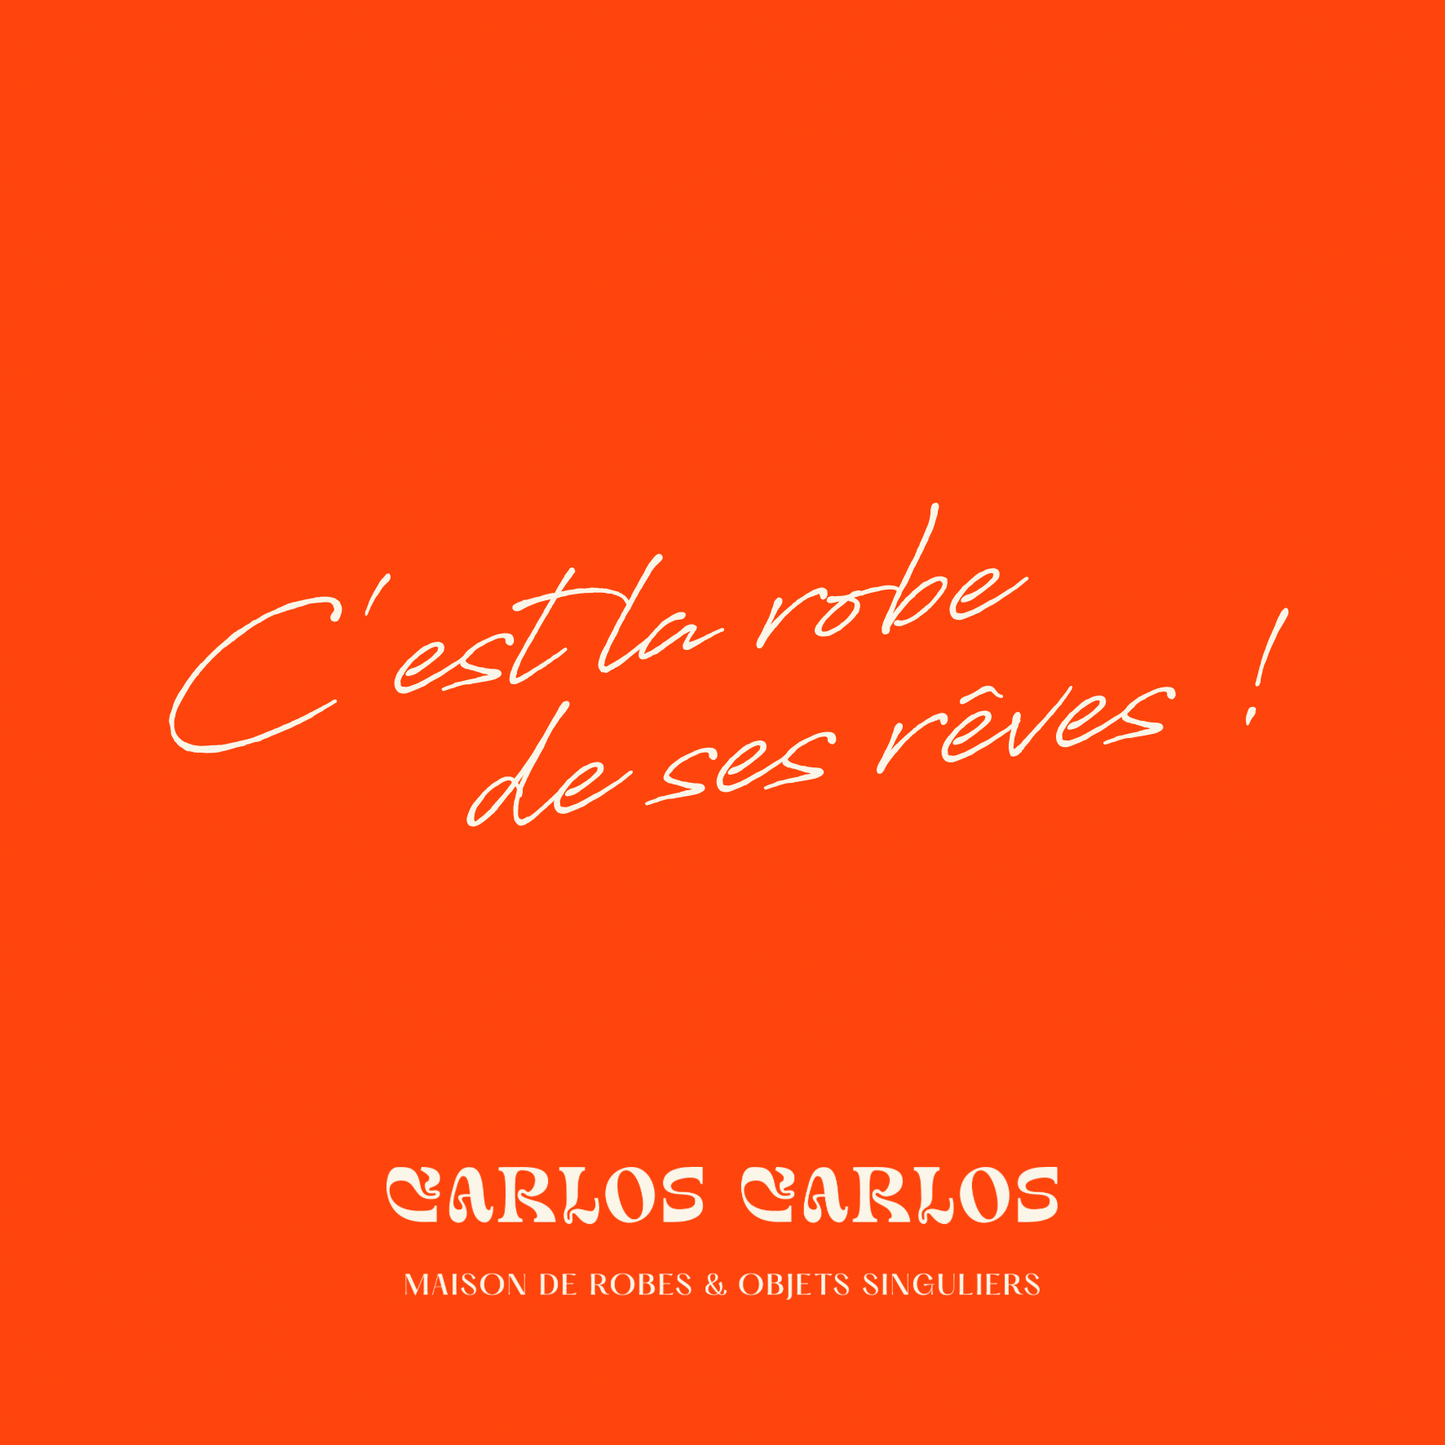 Carlos-Carlos Paris Gift Card